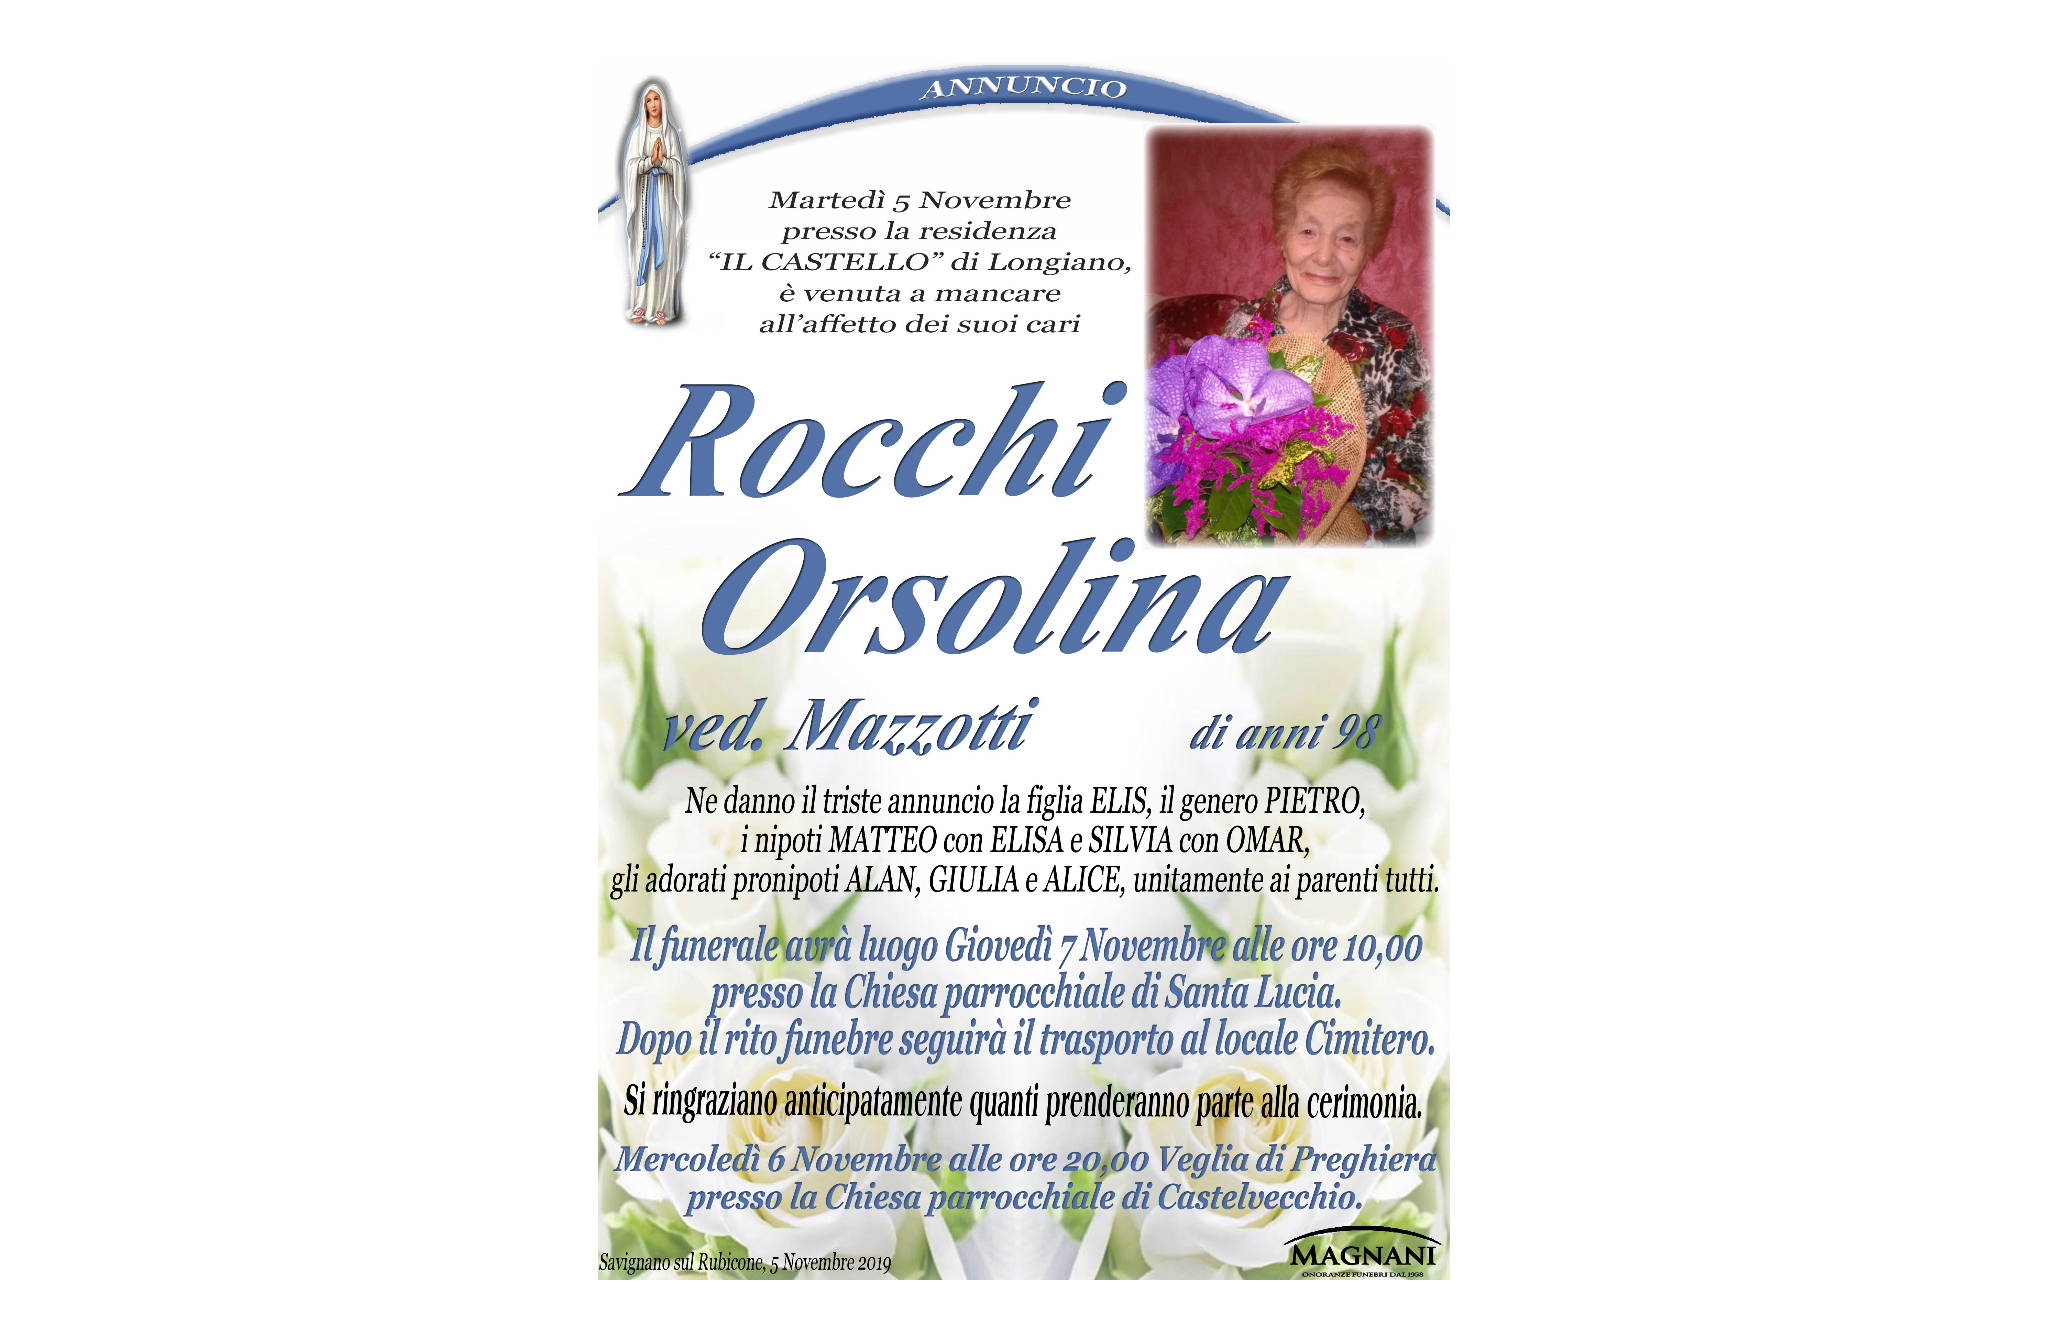 Orsolina Rocchi